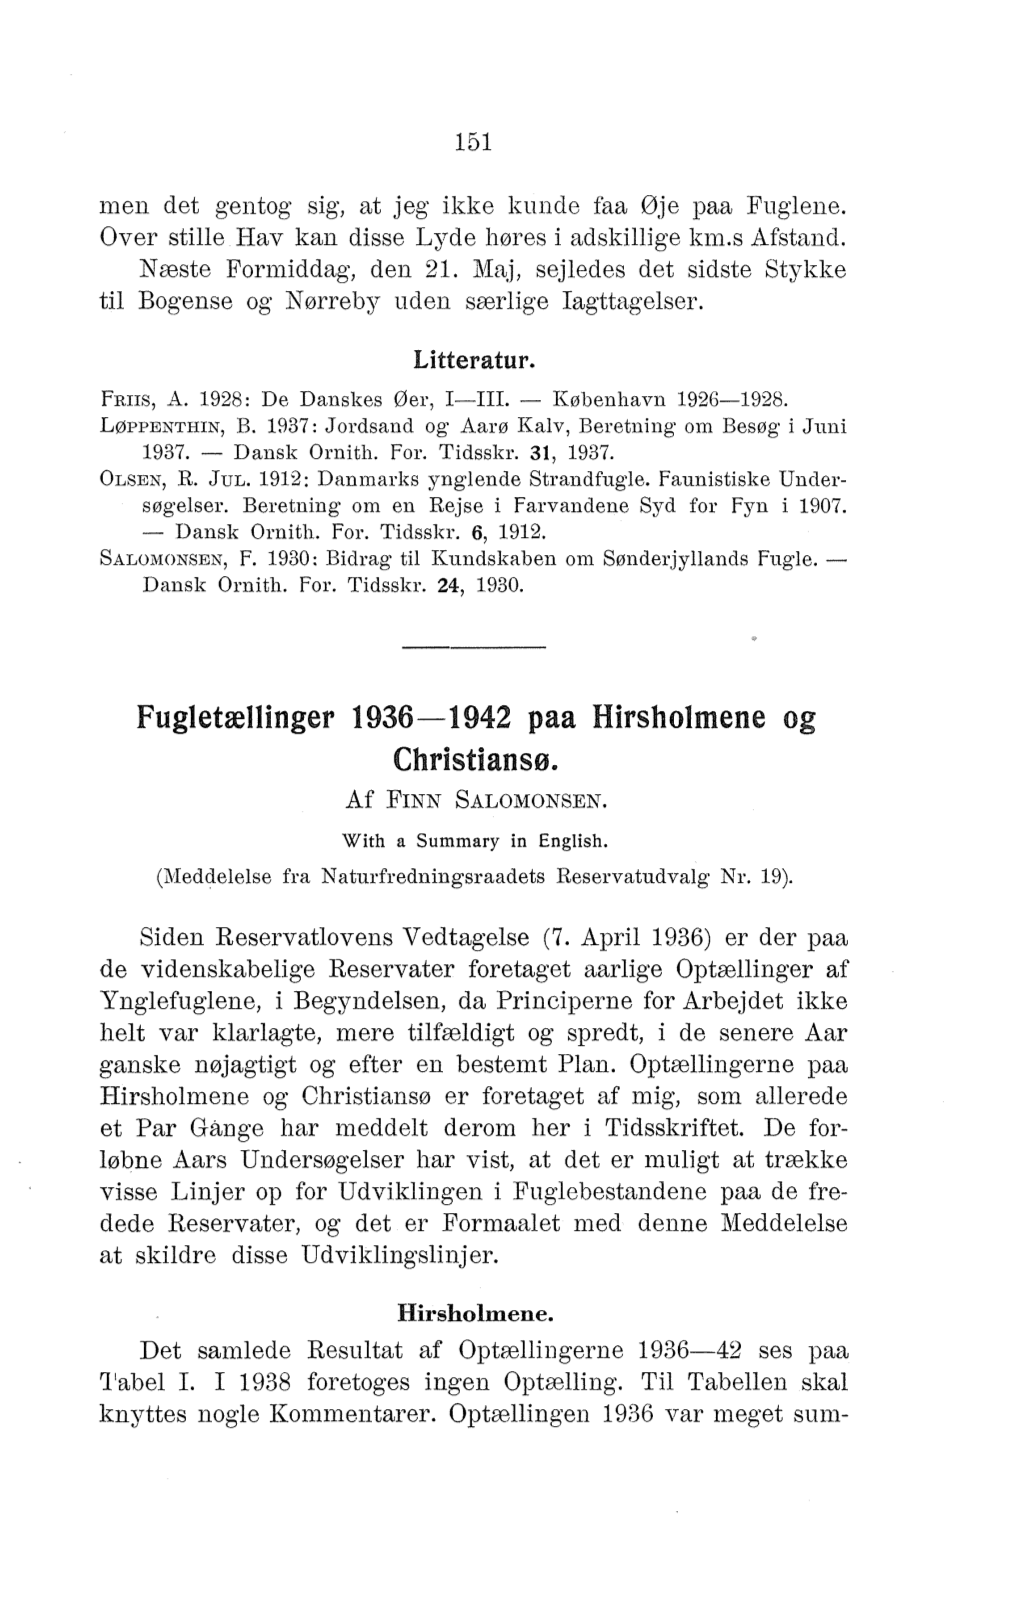 Fugletællinger 1936-1942 Paa Hirsholmene Og Christiansø. Af FINN SALOMONSEN